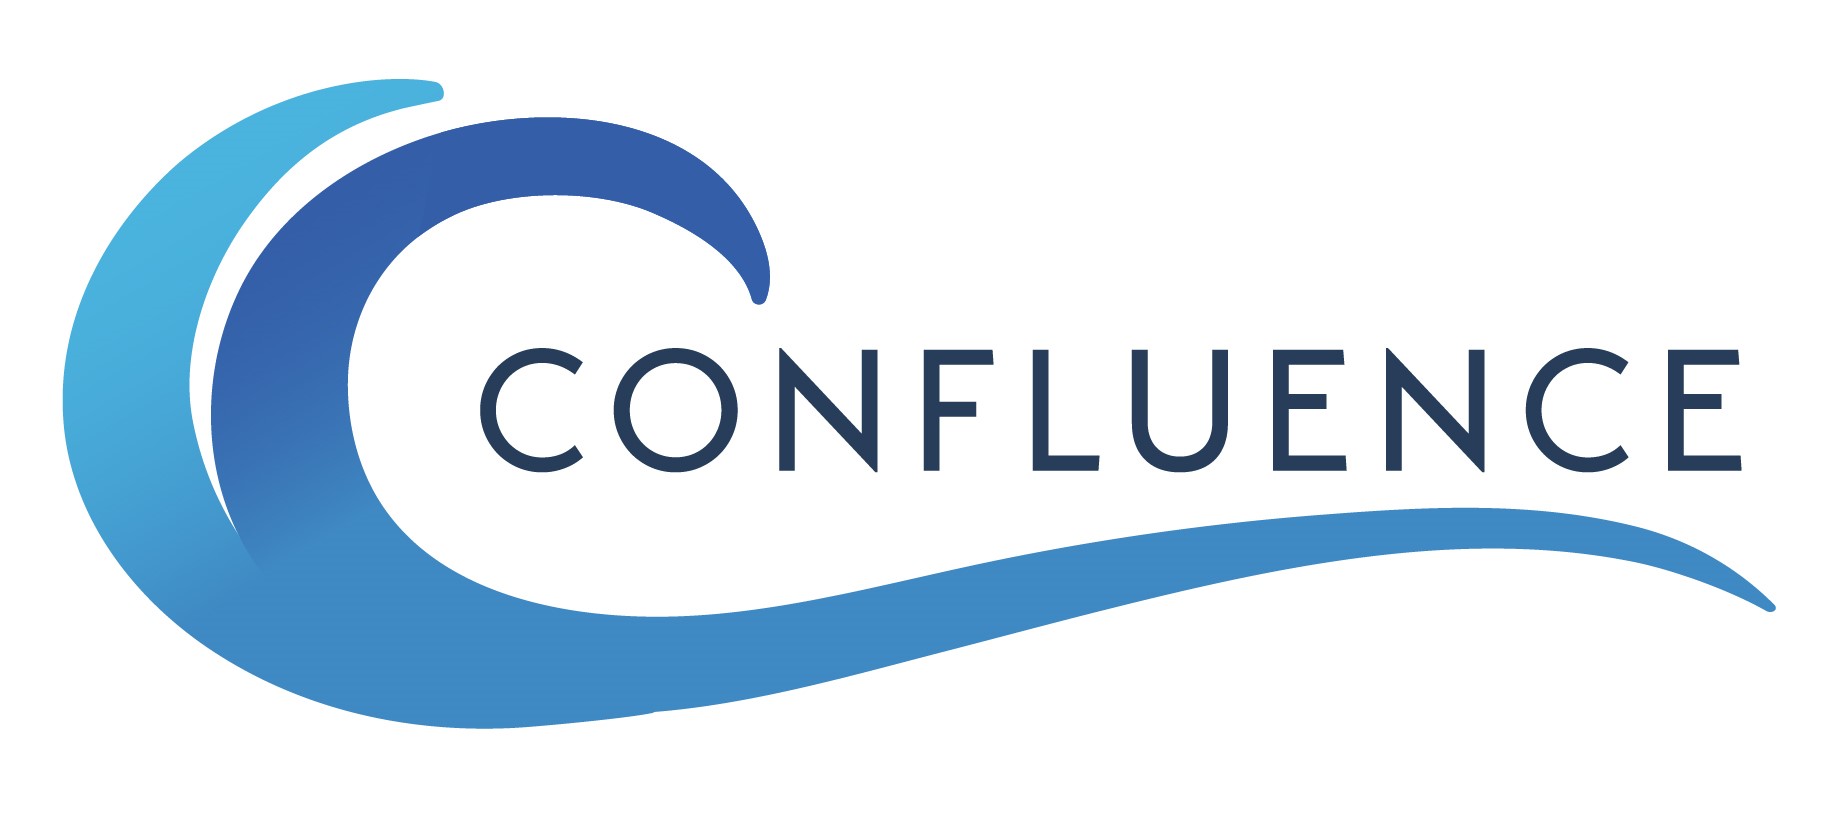 Doubletree Confluence Logo